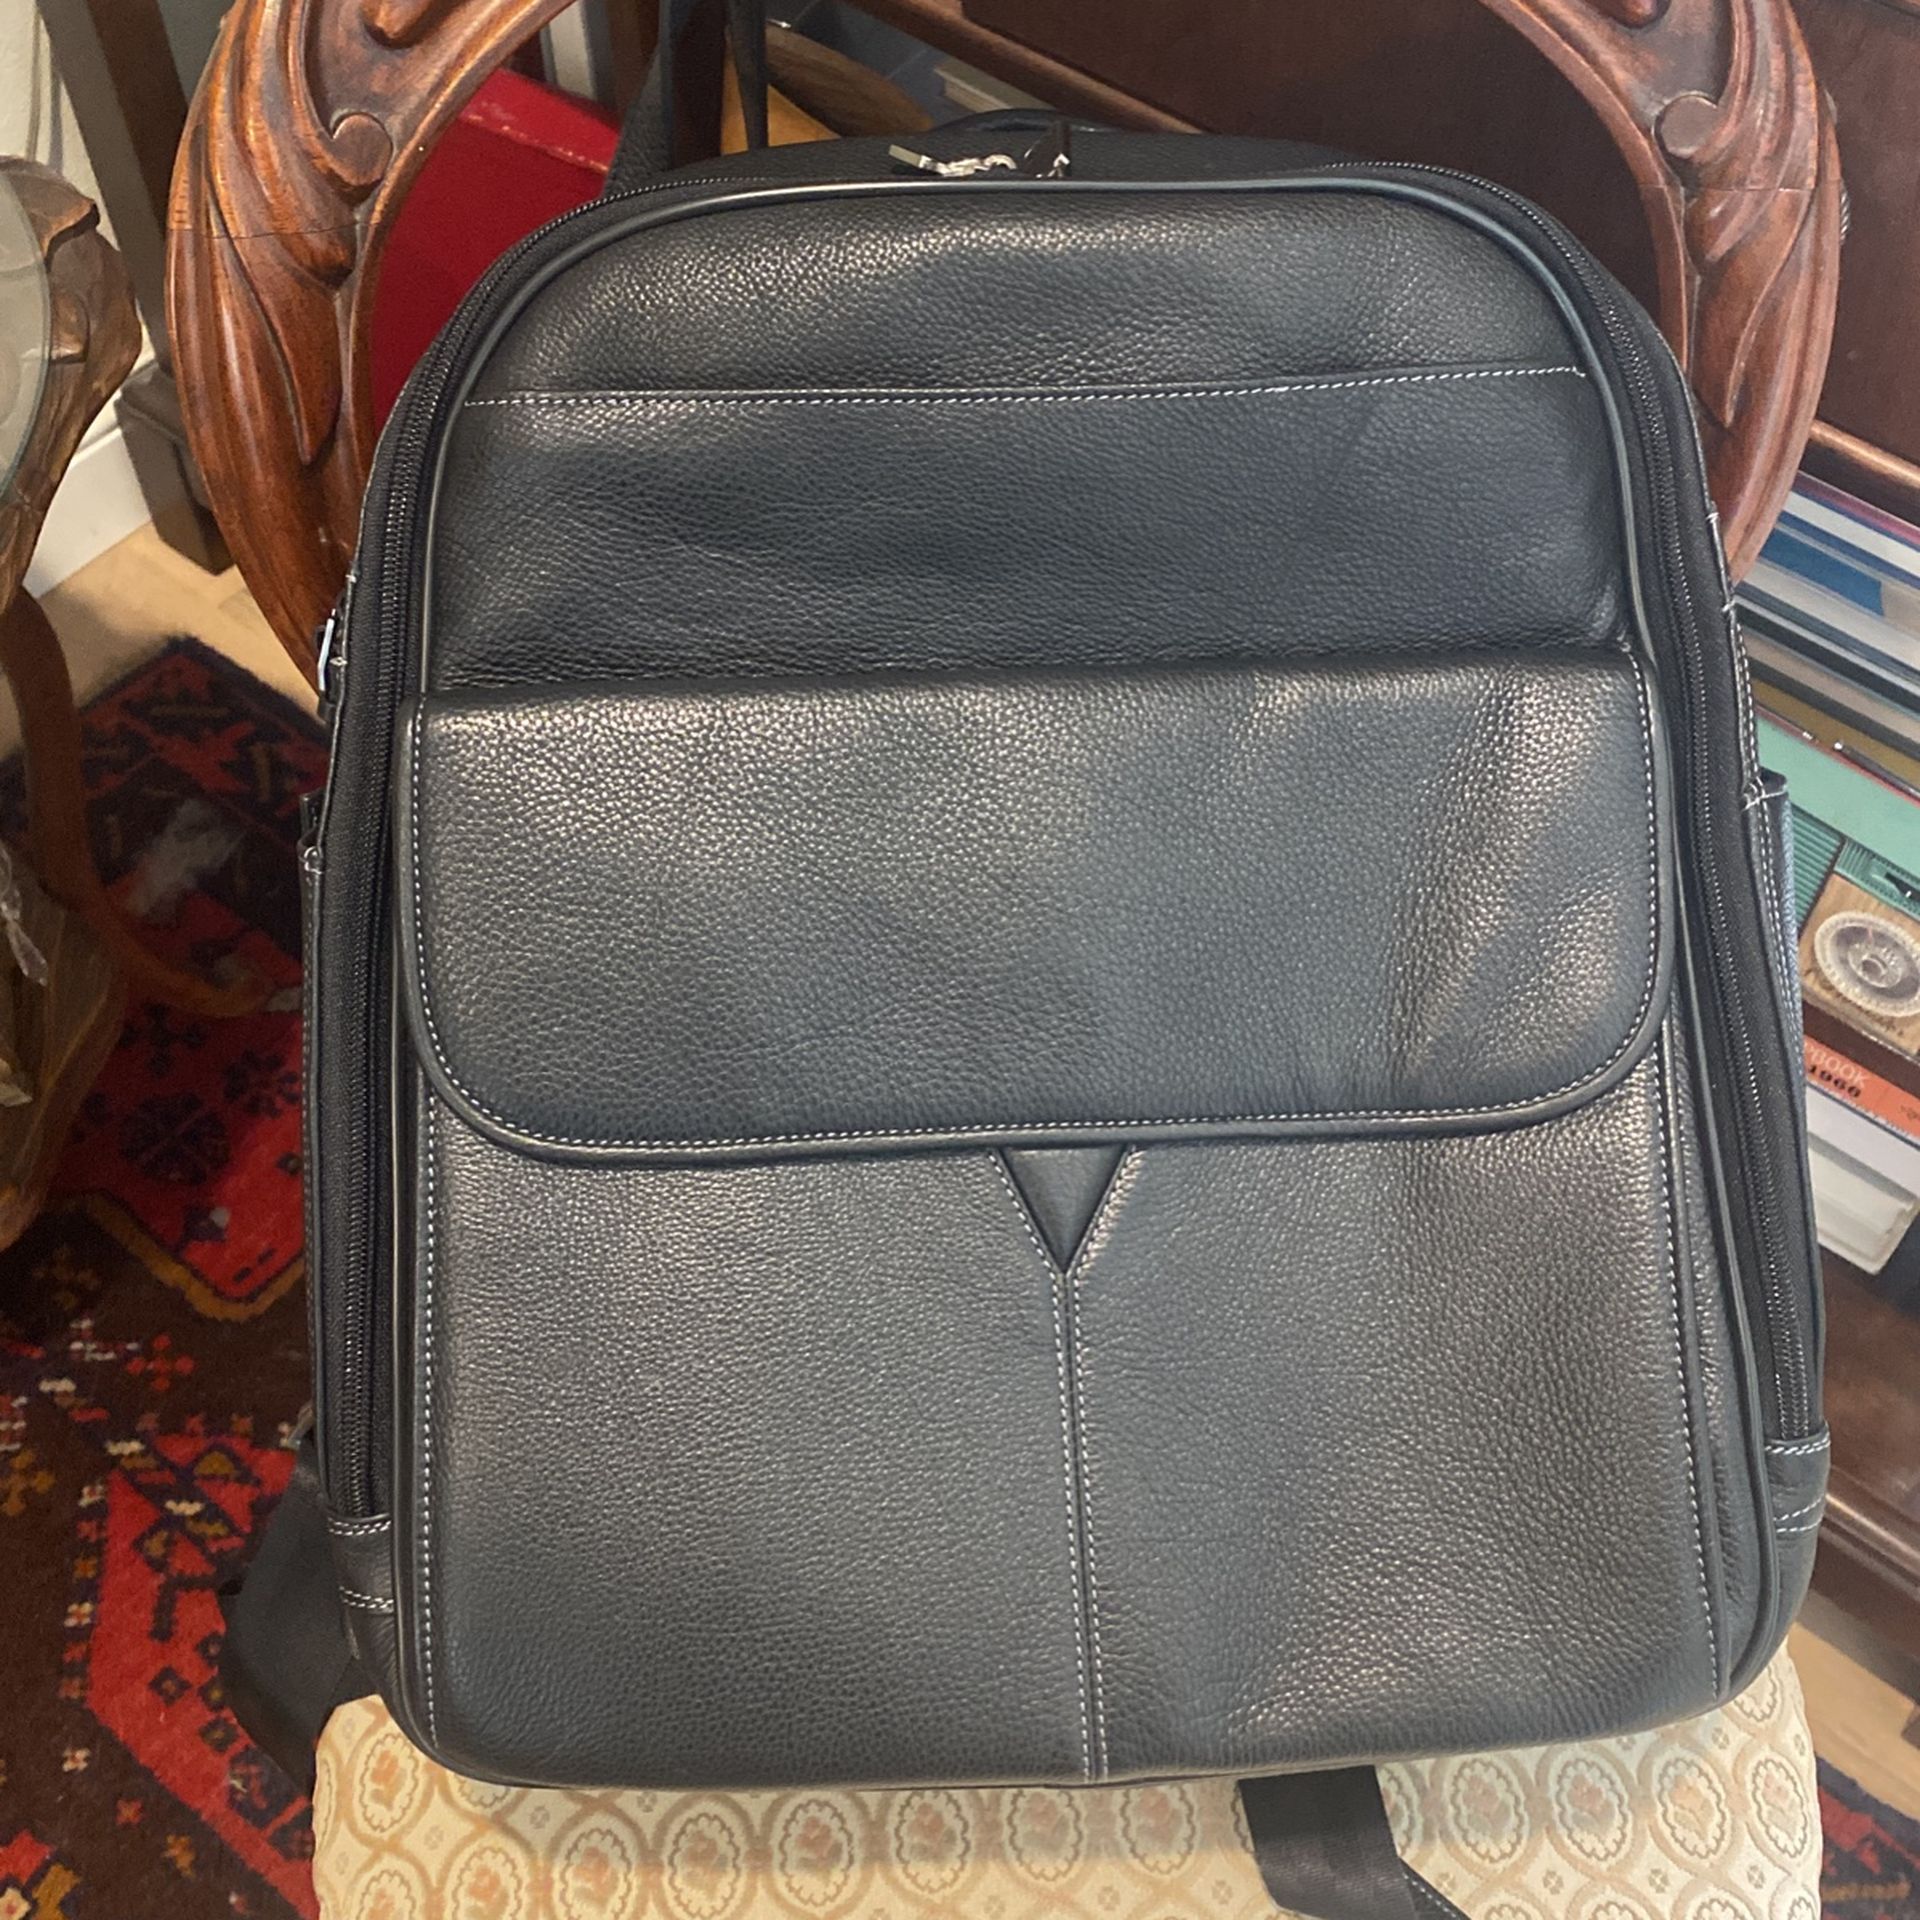 Johnston Murphy Leather Backpack NWOT